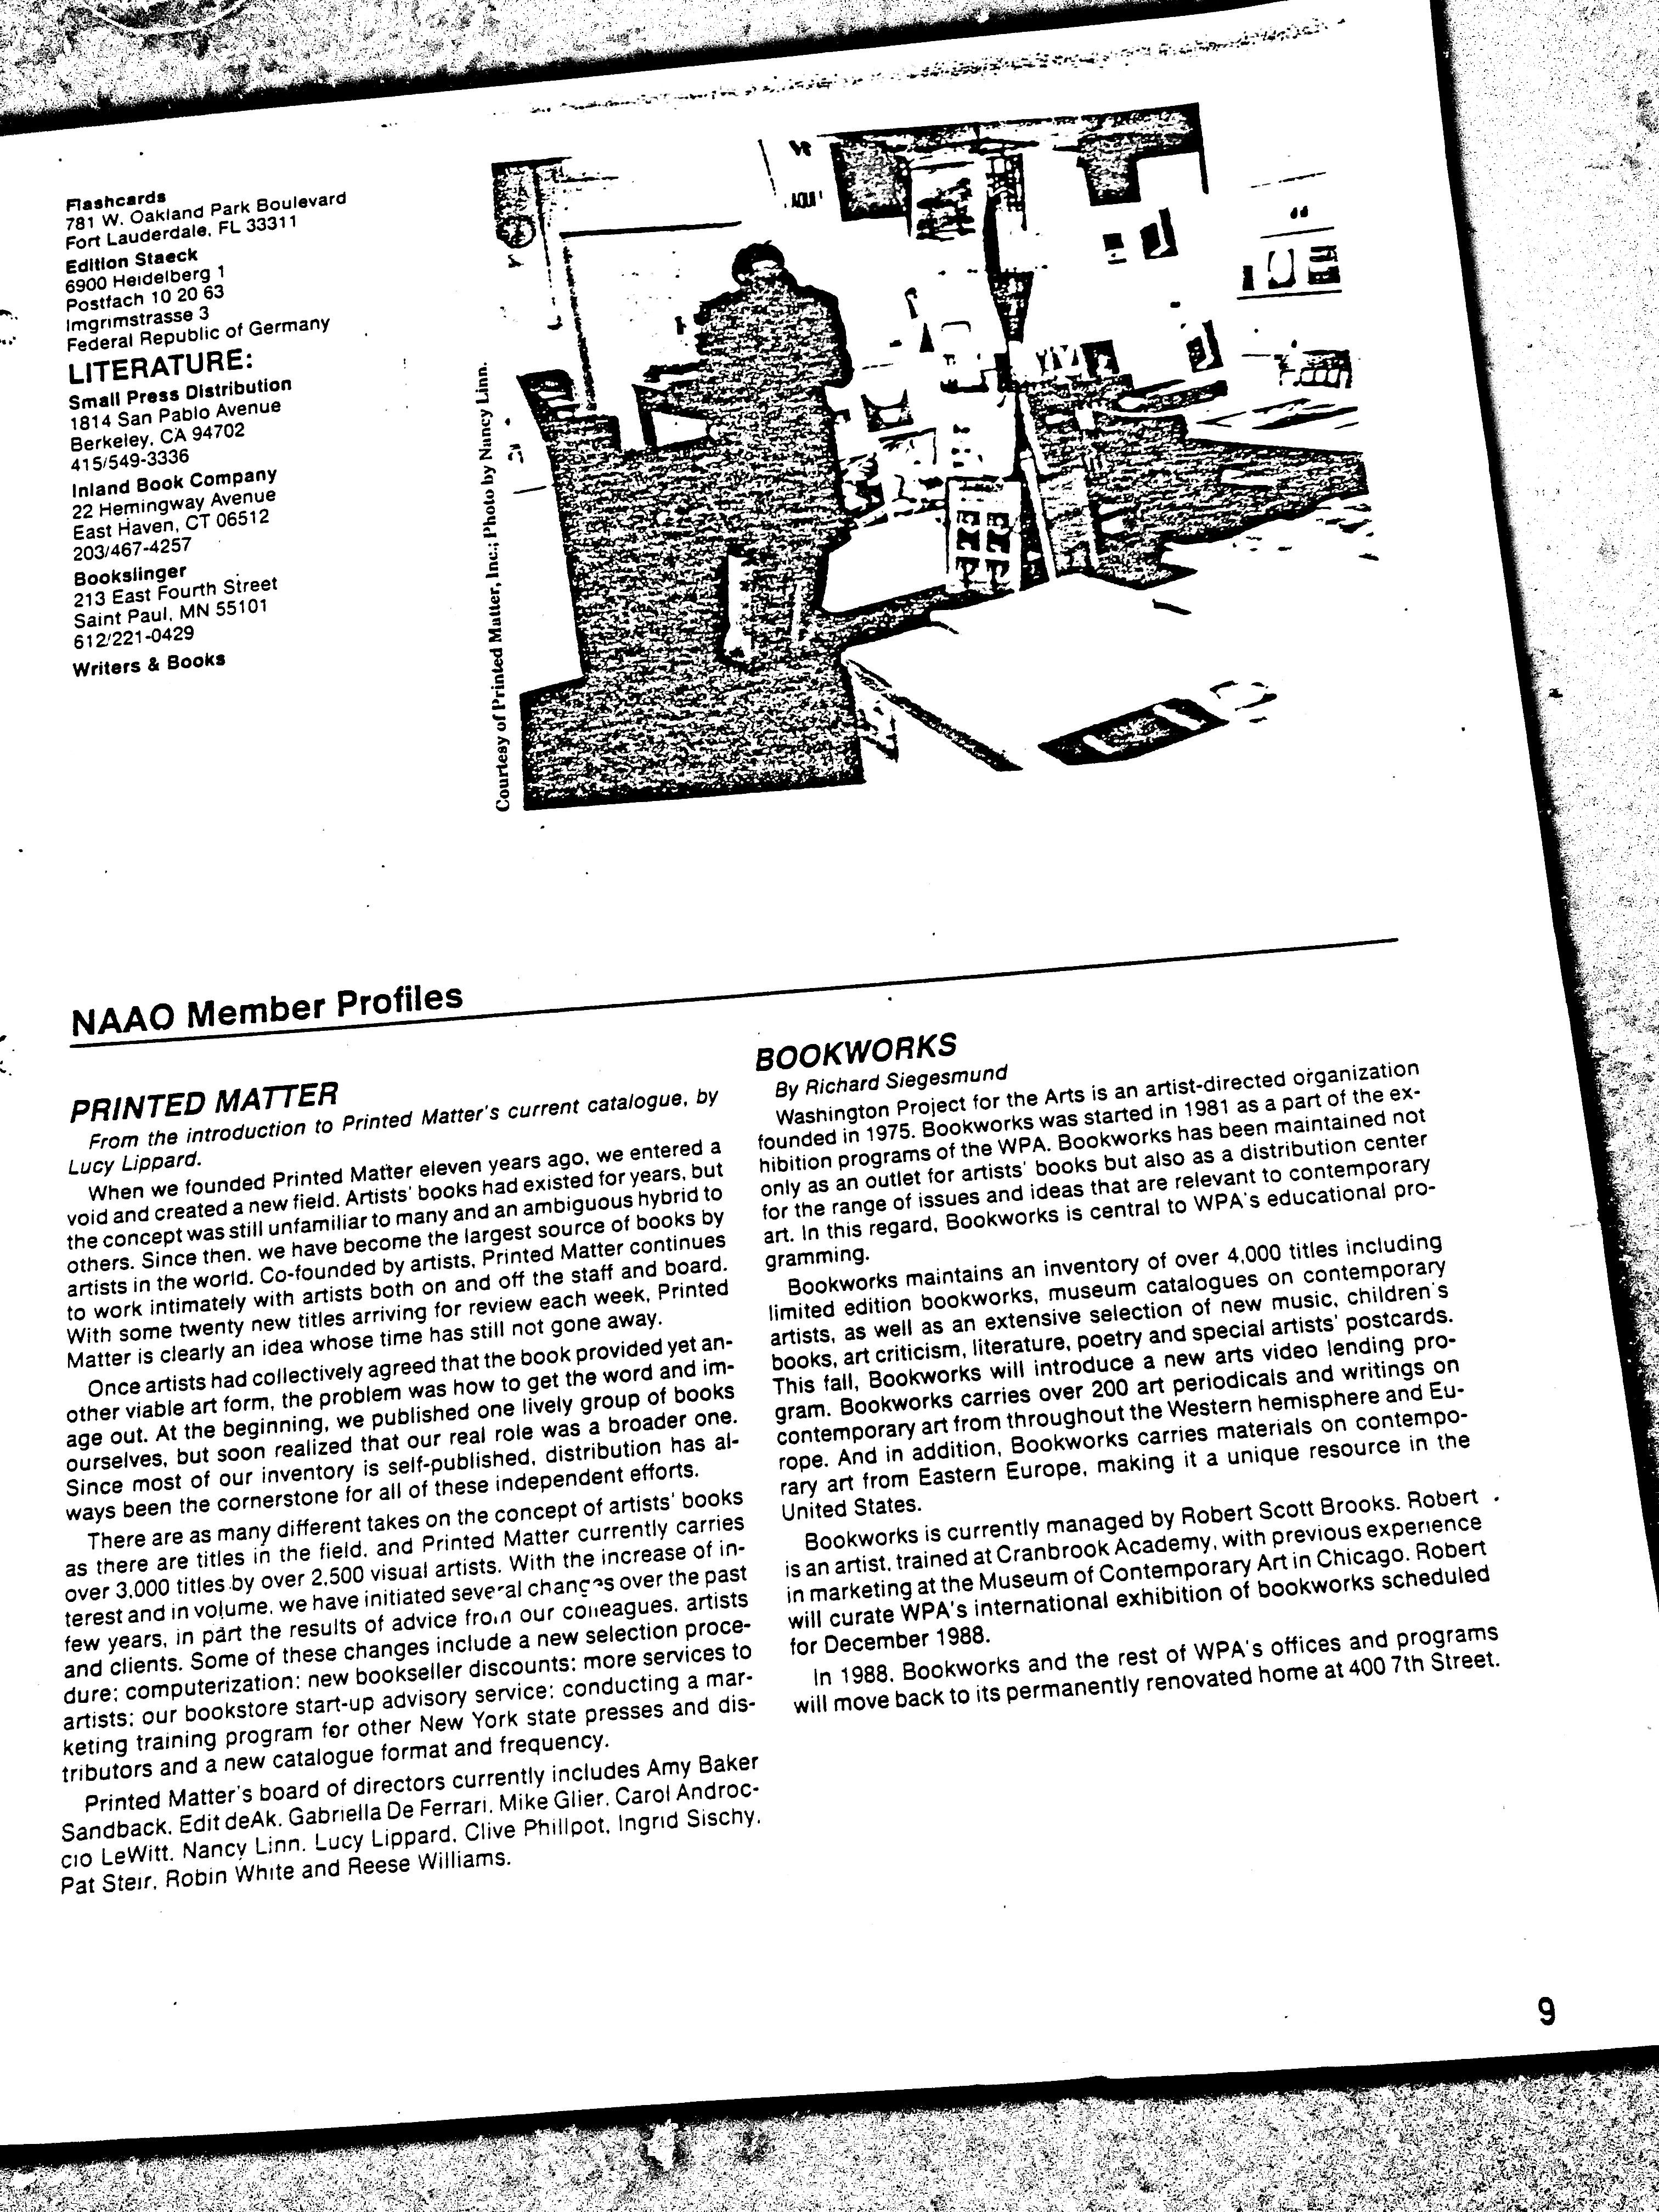 September-October 1987 - NAAO Bulletin Page 9.jpg